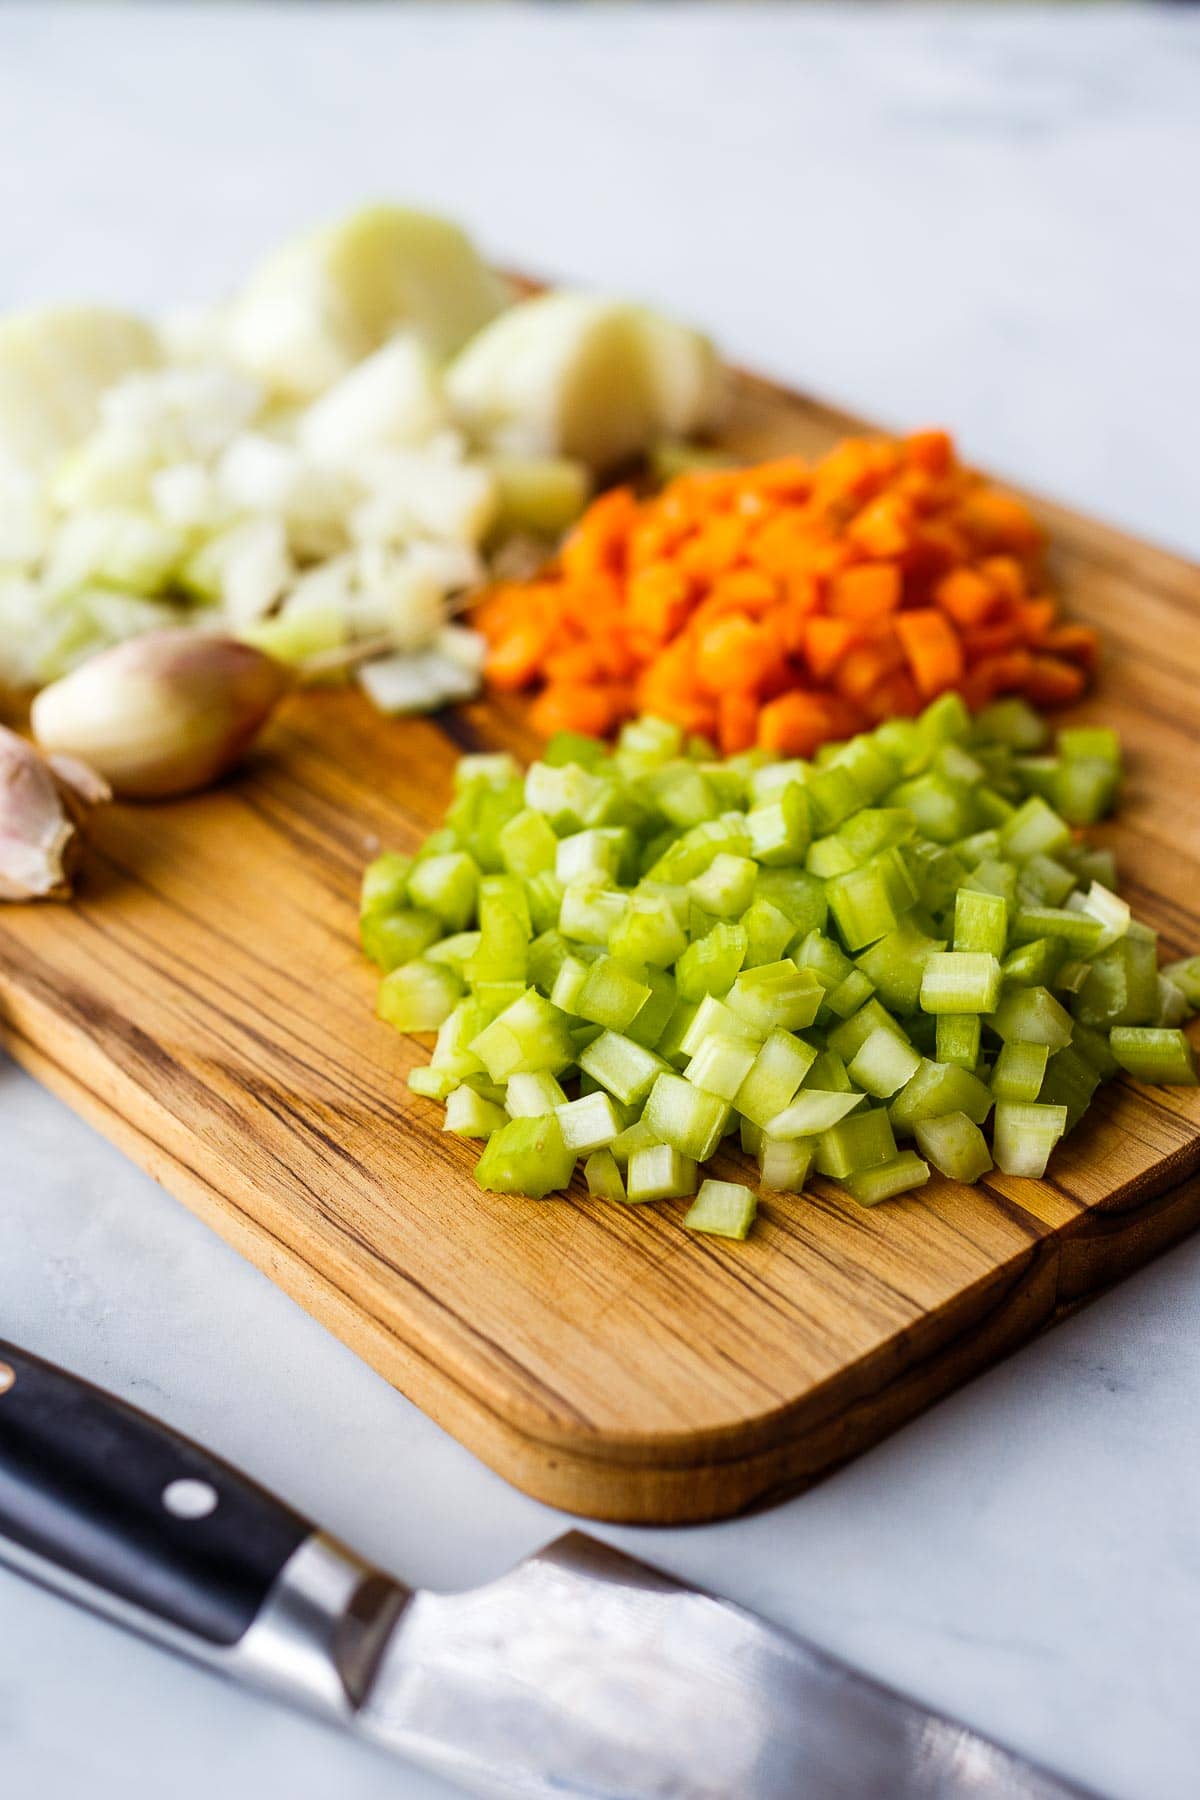 Chopped onion, carrots and celery.